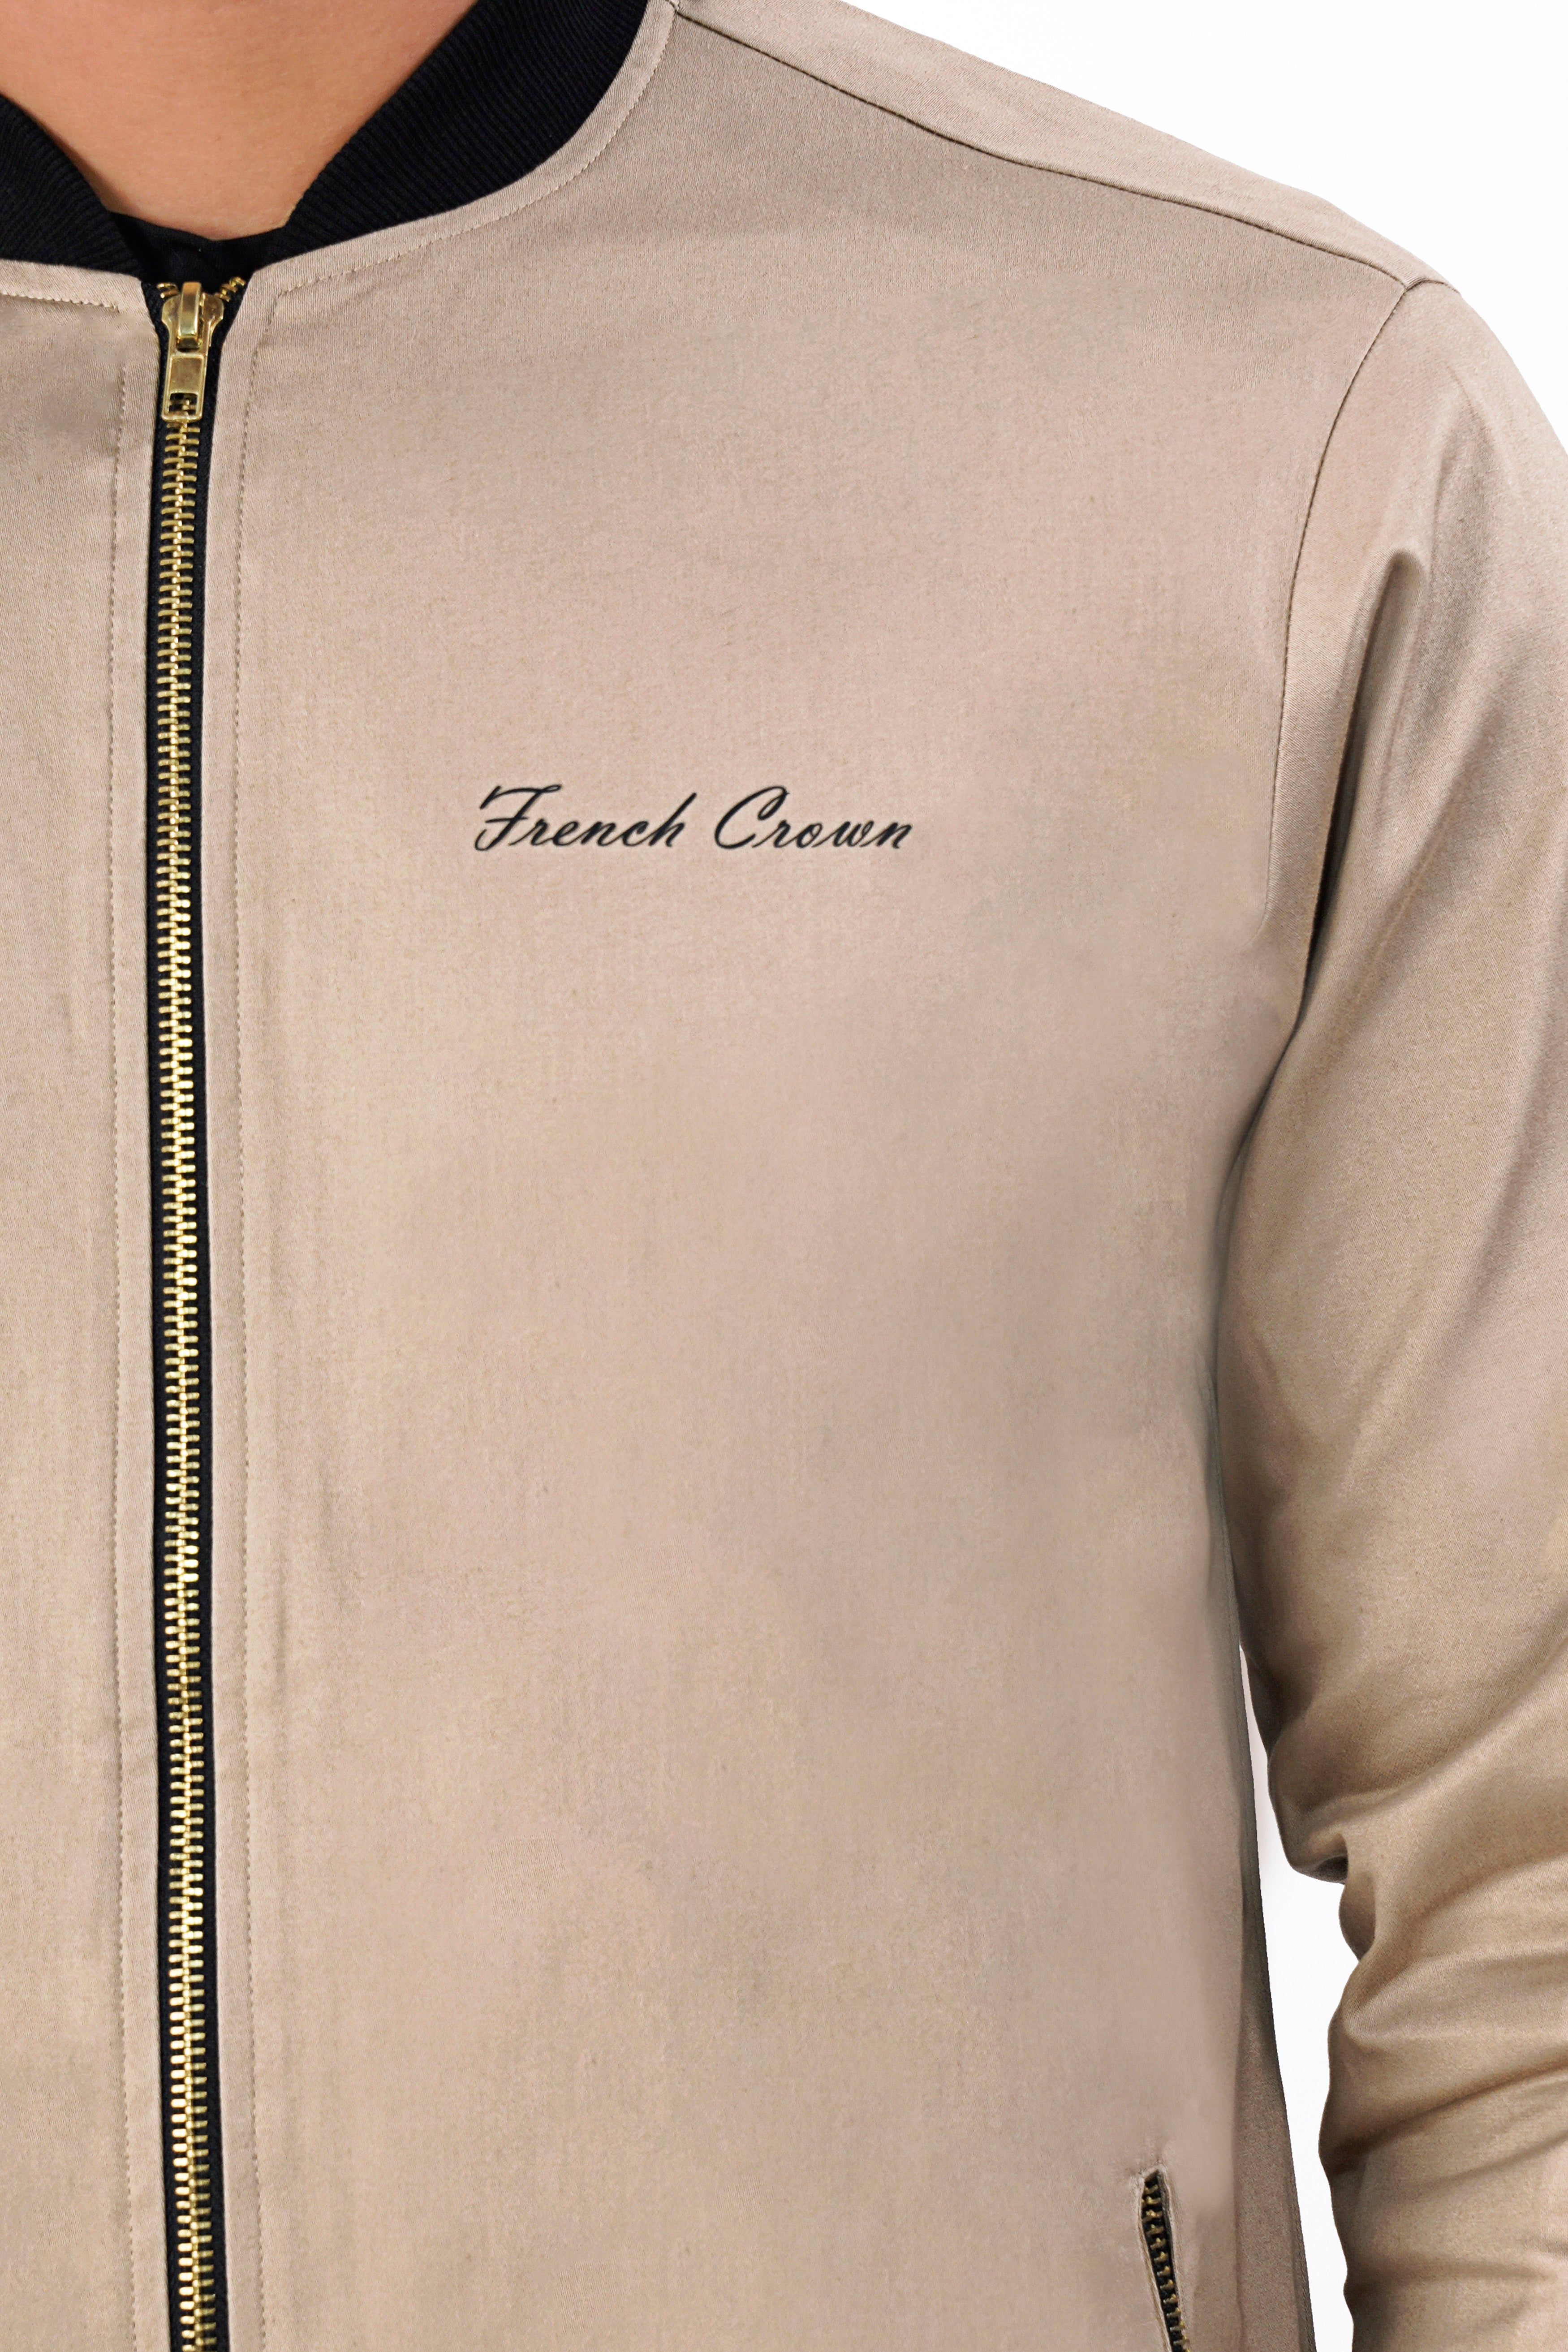 Thatch Brown Premium Cotton Bomber Jacket